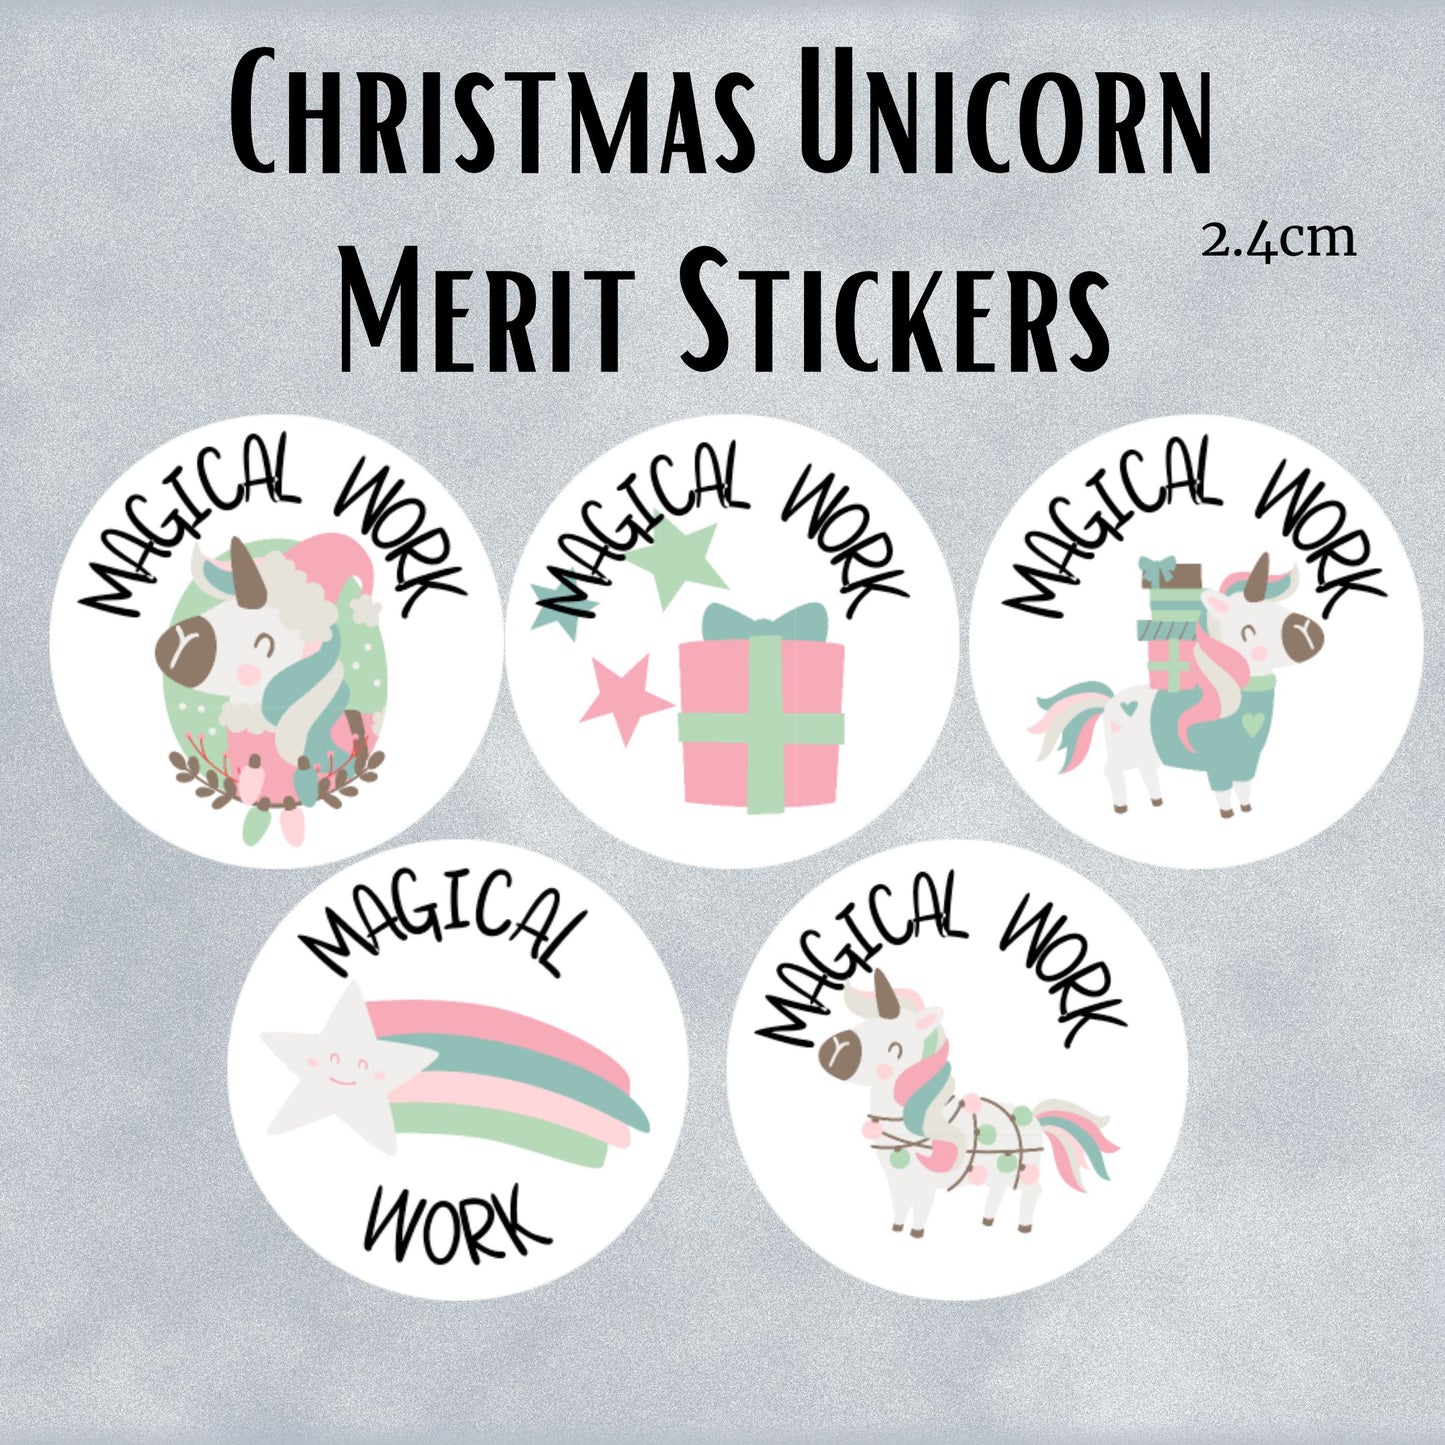 Unicorn Christmas Merit Stickers